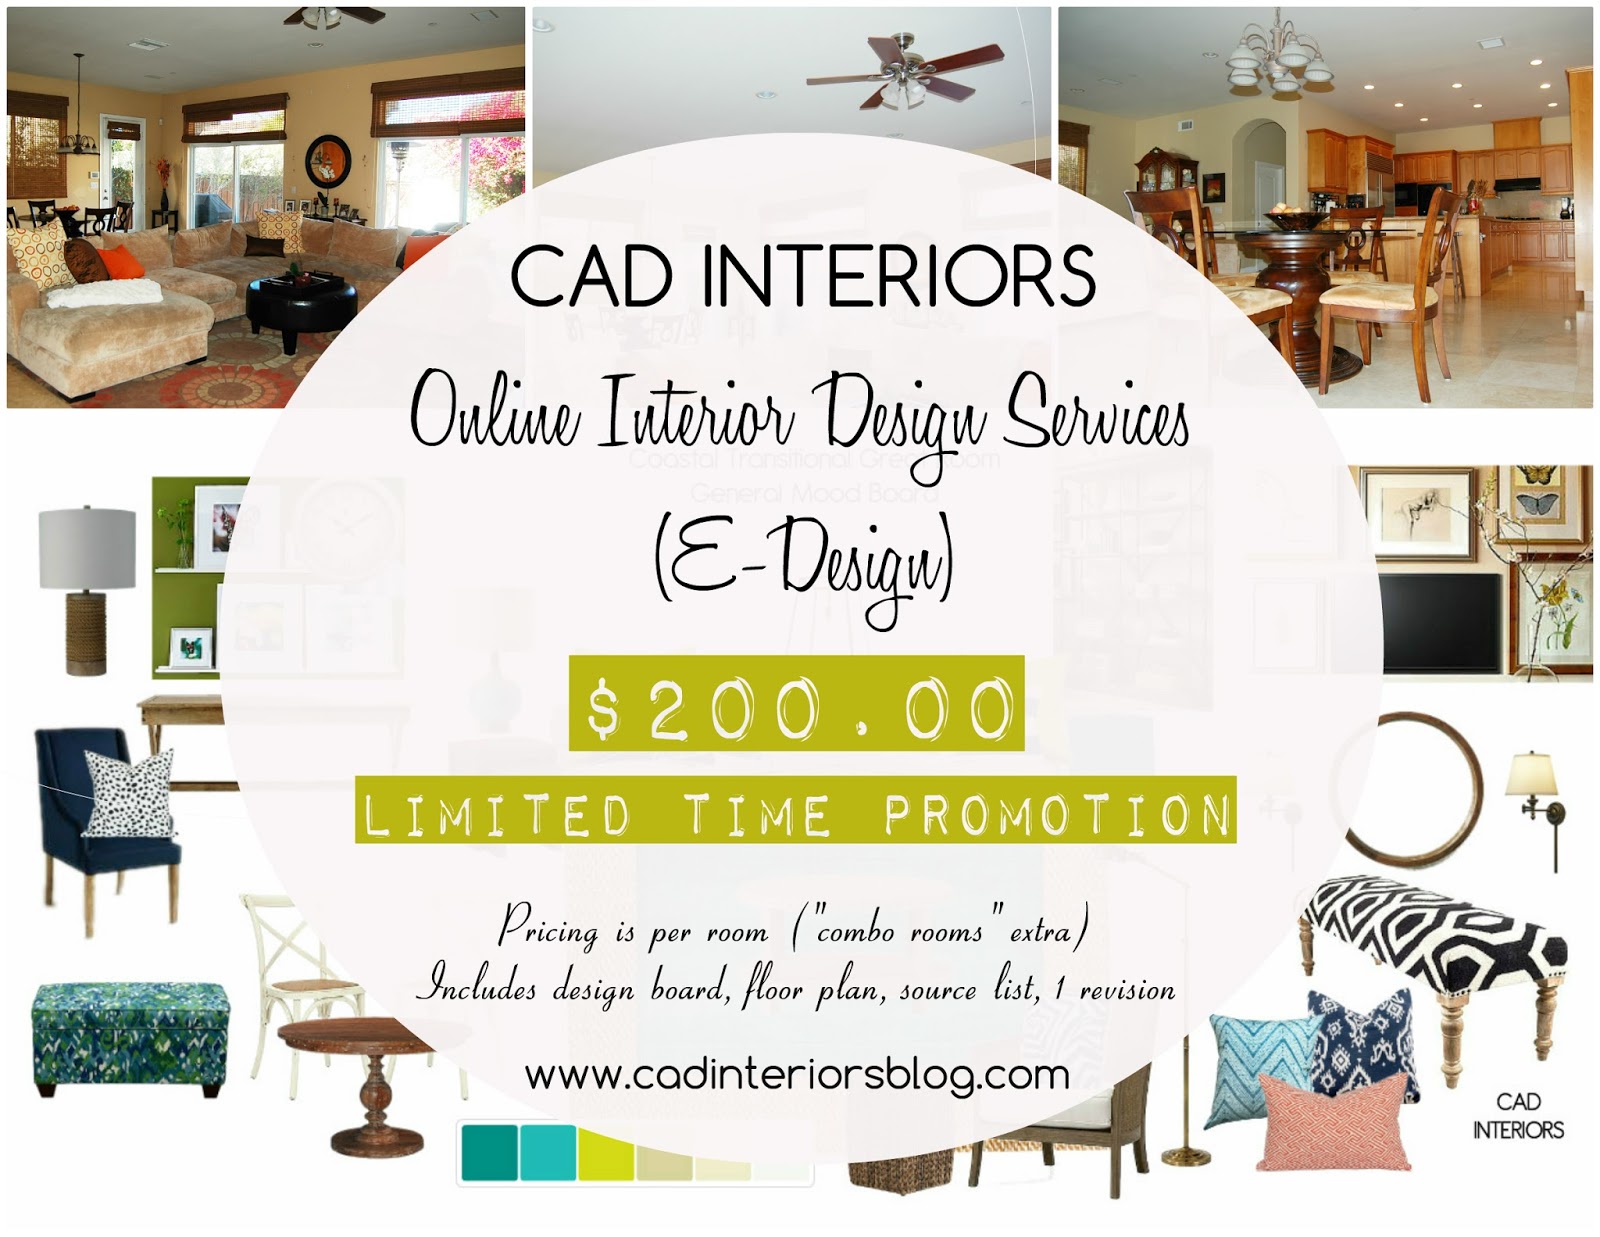 online e-design interior design services special pricing offer promo